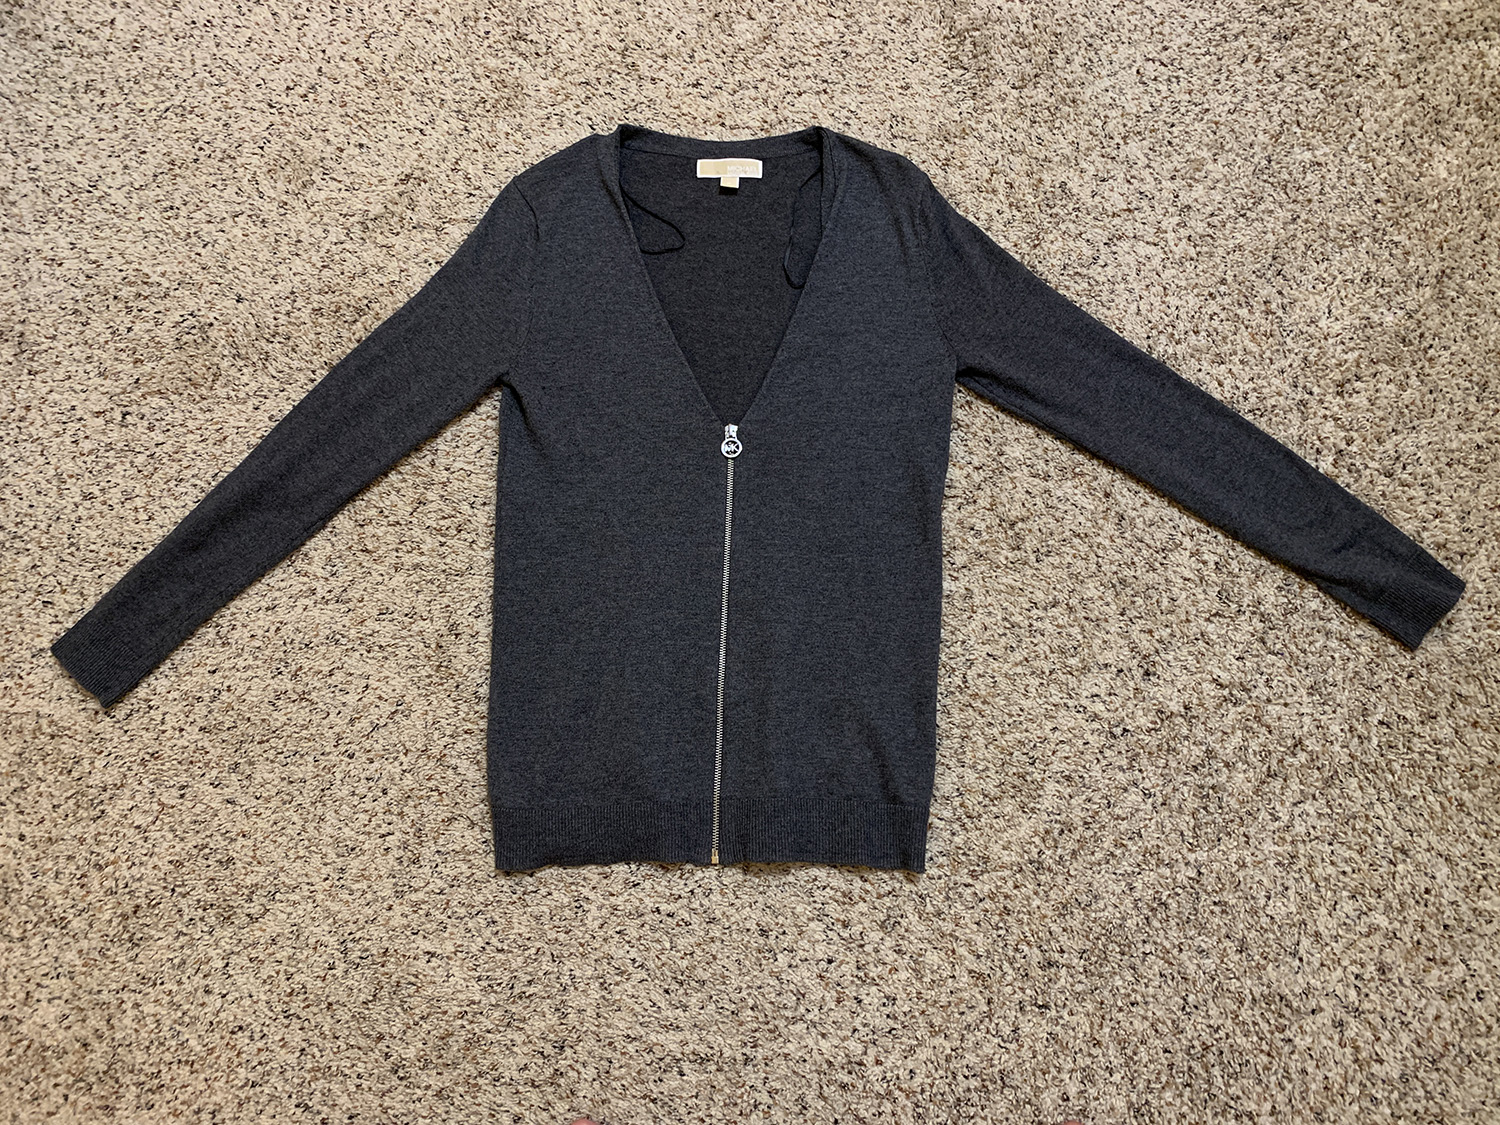 Michael Kors Womens Dark Grey Zip-Up Cardigan Size M at The MenuGem Web Store